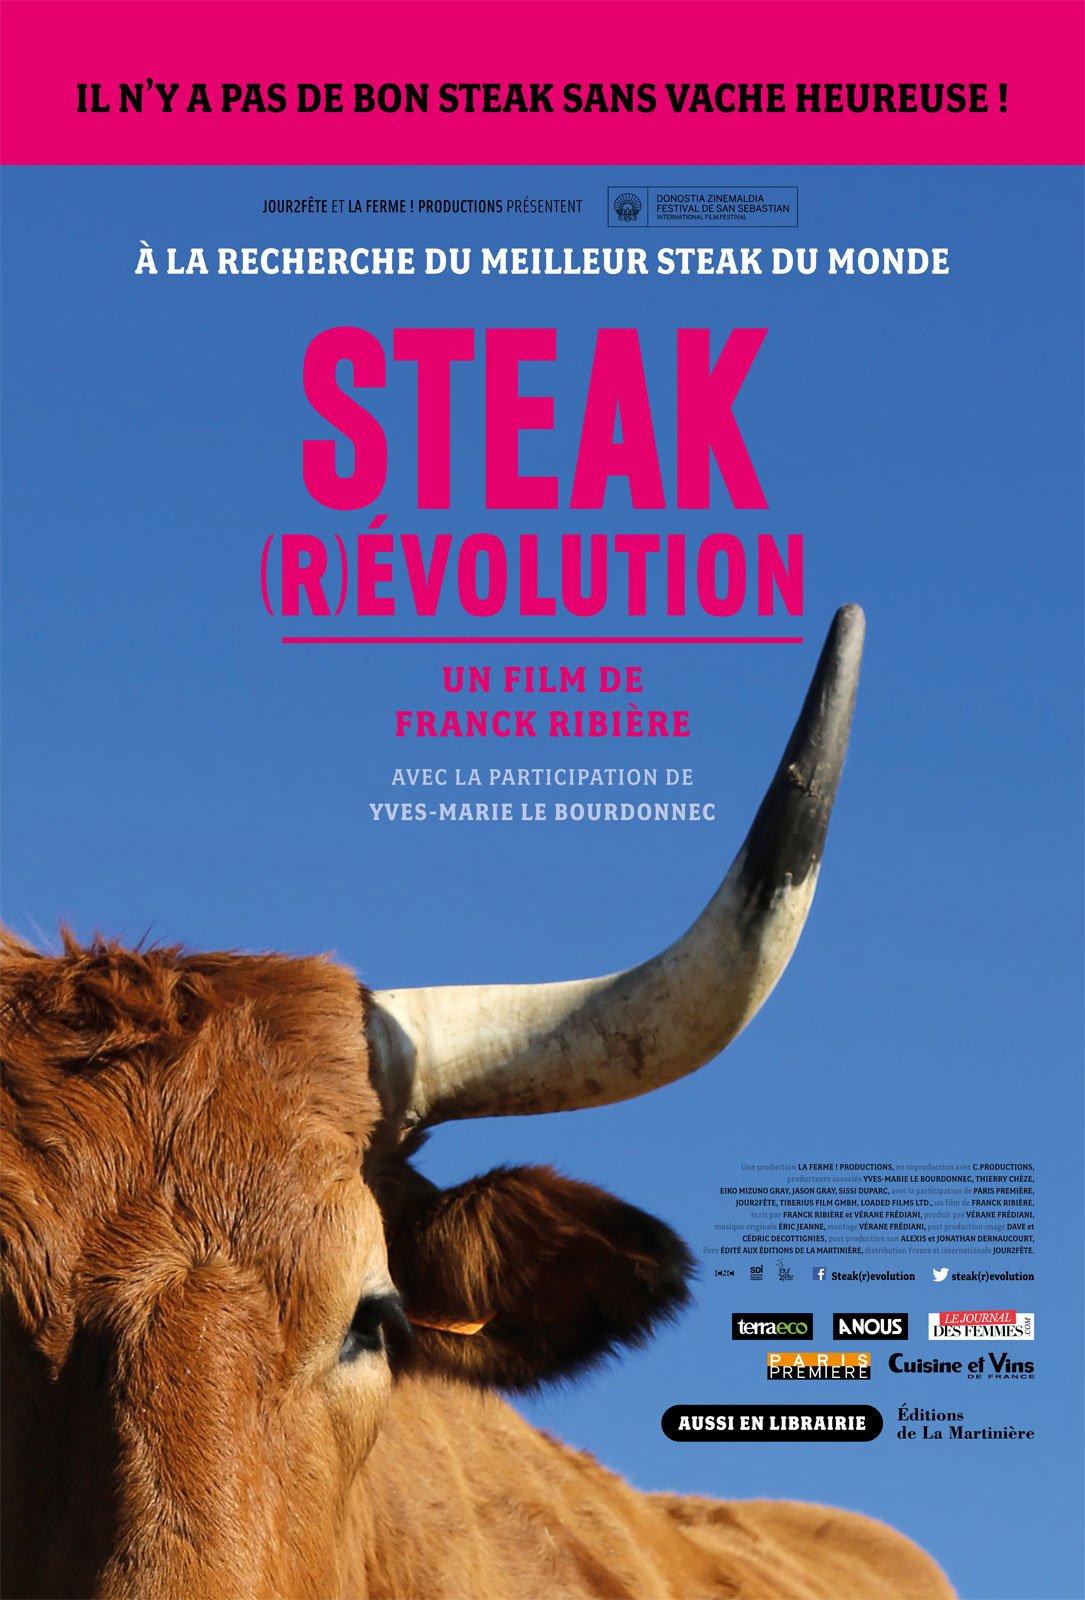 Poster of the movie Steak Revolution